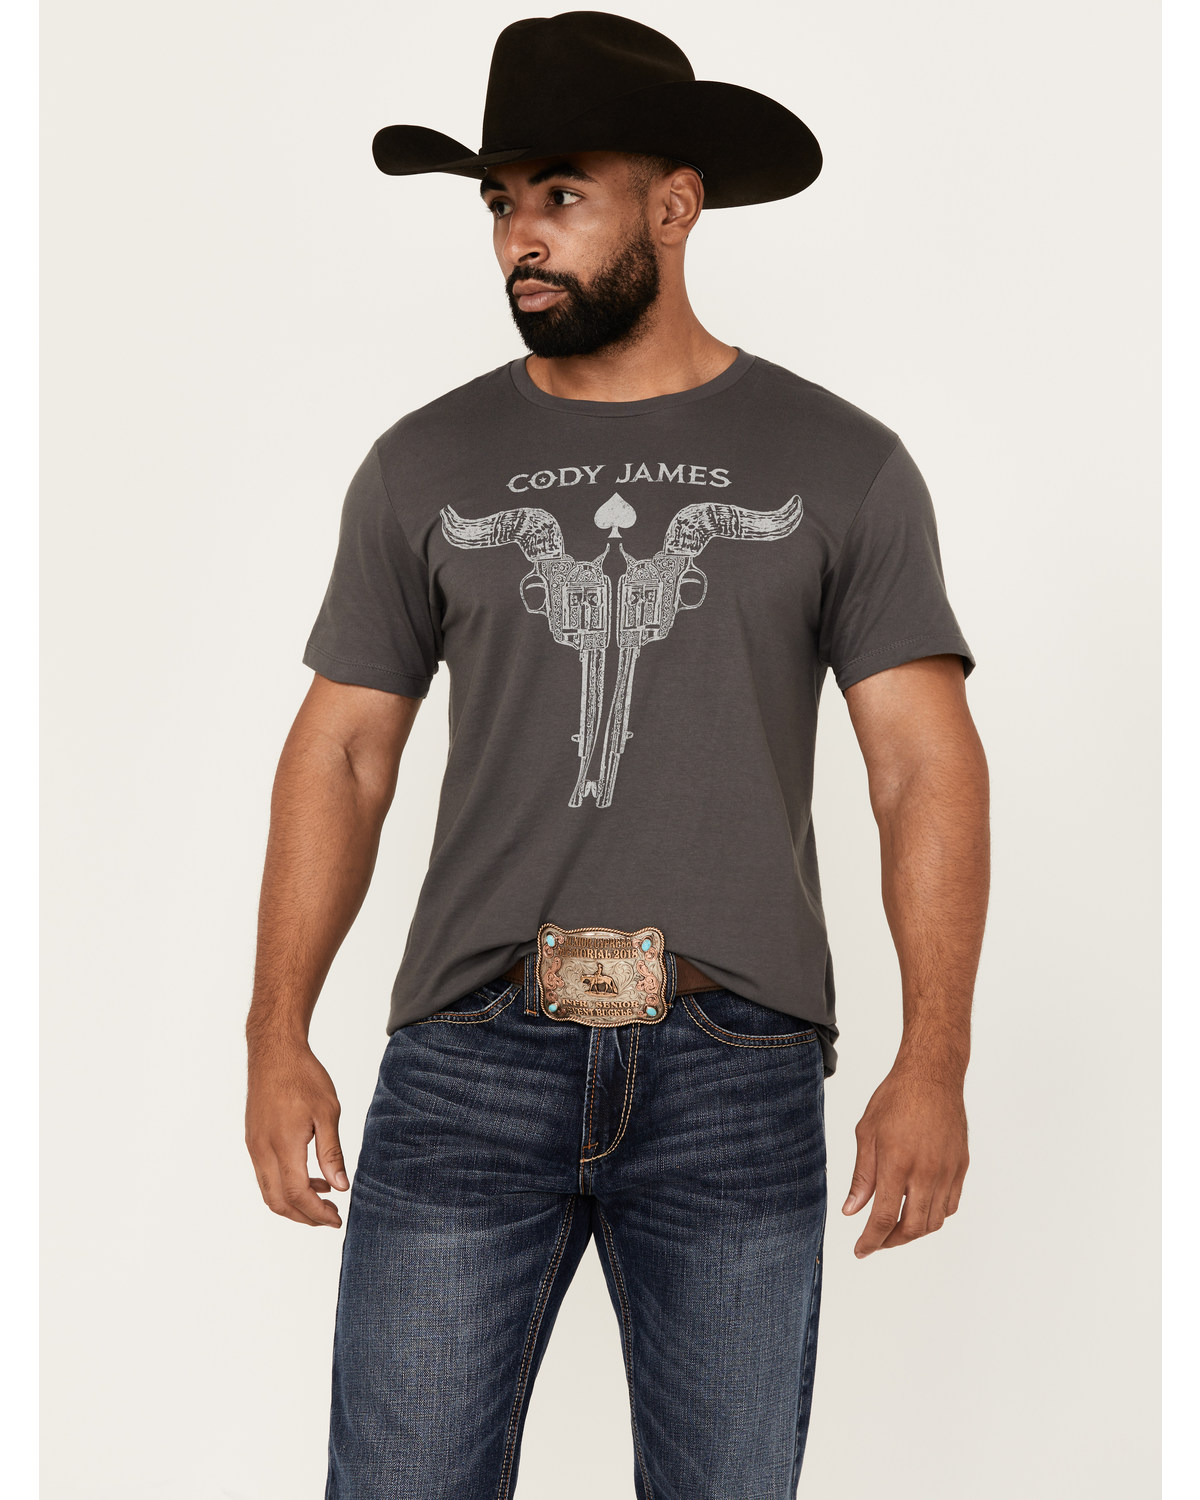 Cody James Men's Bullhead Guns Short Sleeve Graphic T-Shirt